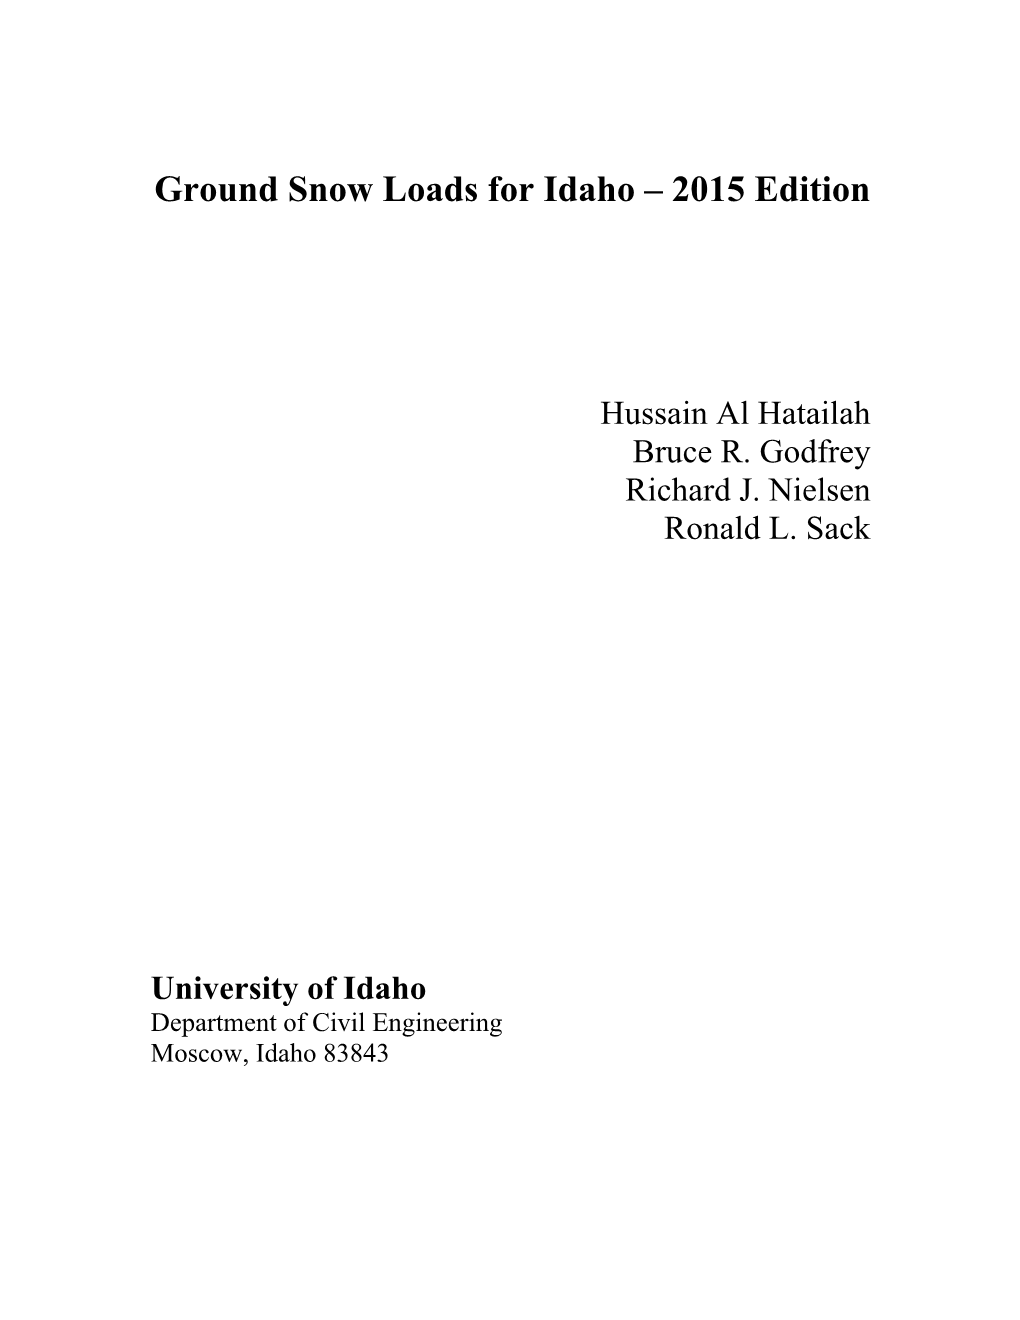 Ground Snow Loads for Idaho 2016